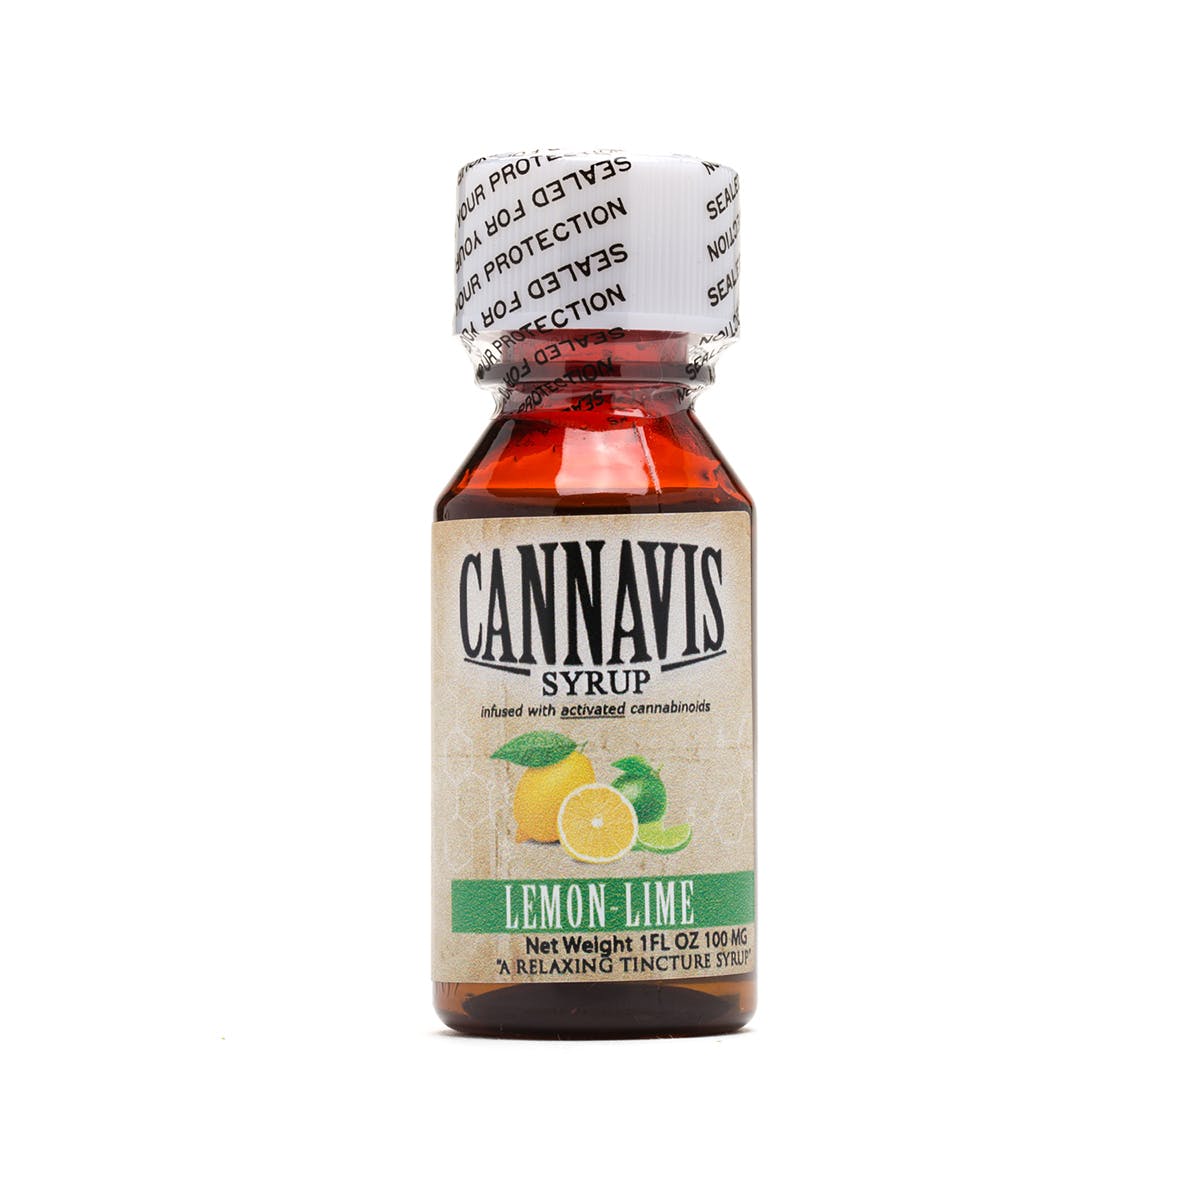 marijuana-dispensaries-papas-a-bud-in-covina-cannavis-syrup-2c-lemon-lime-100mg